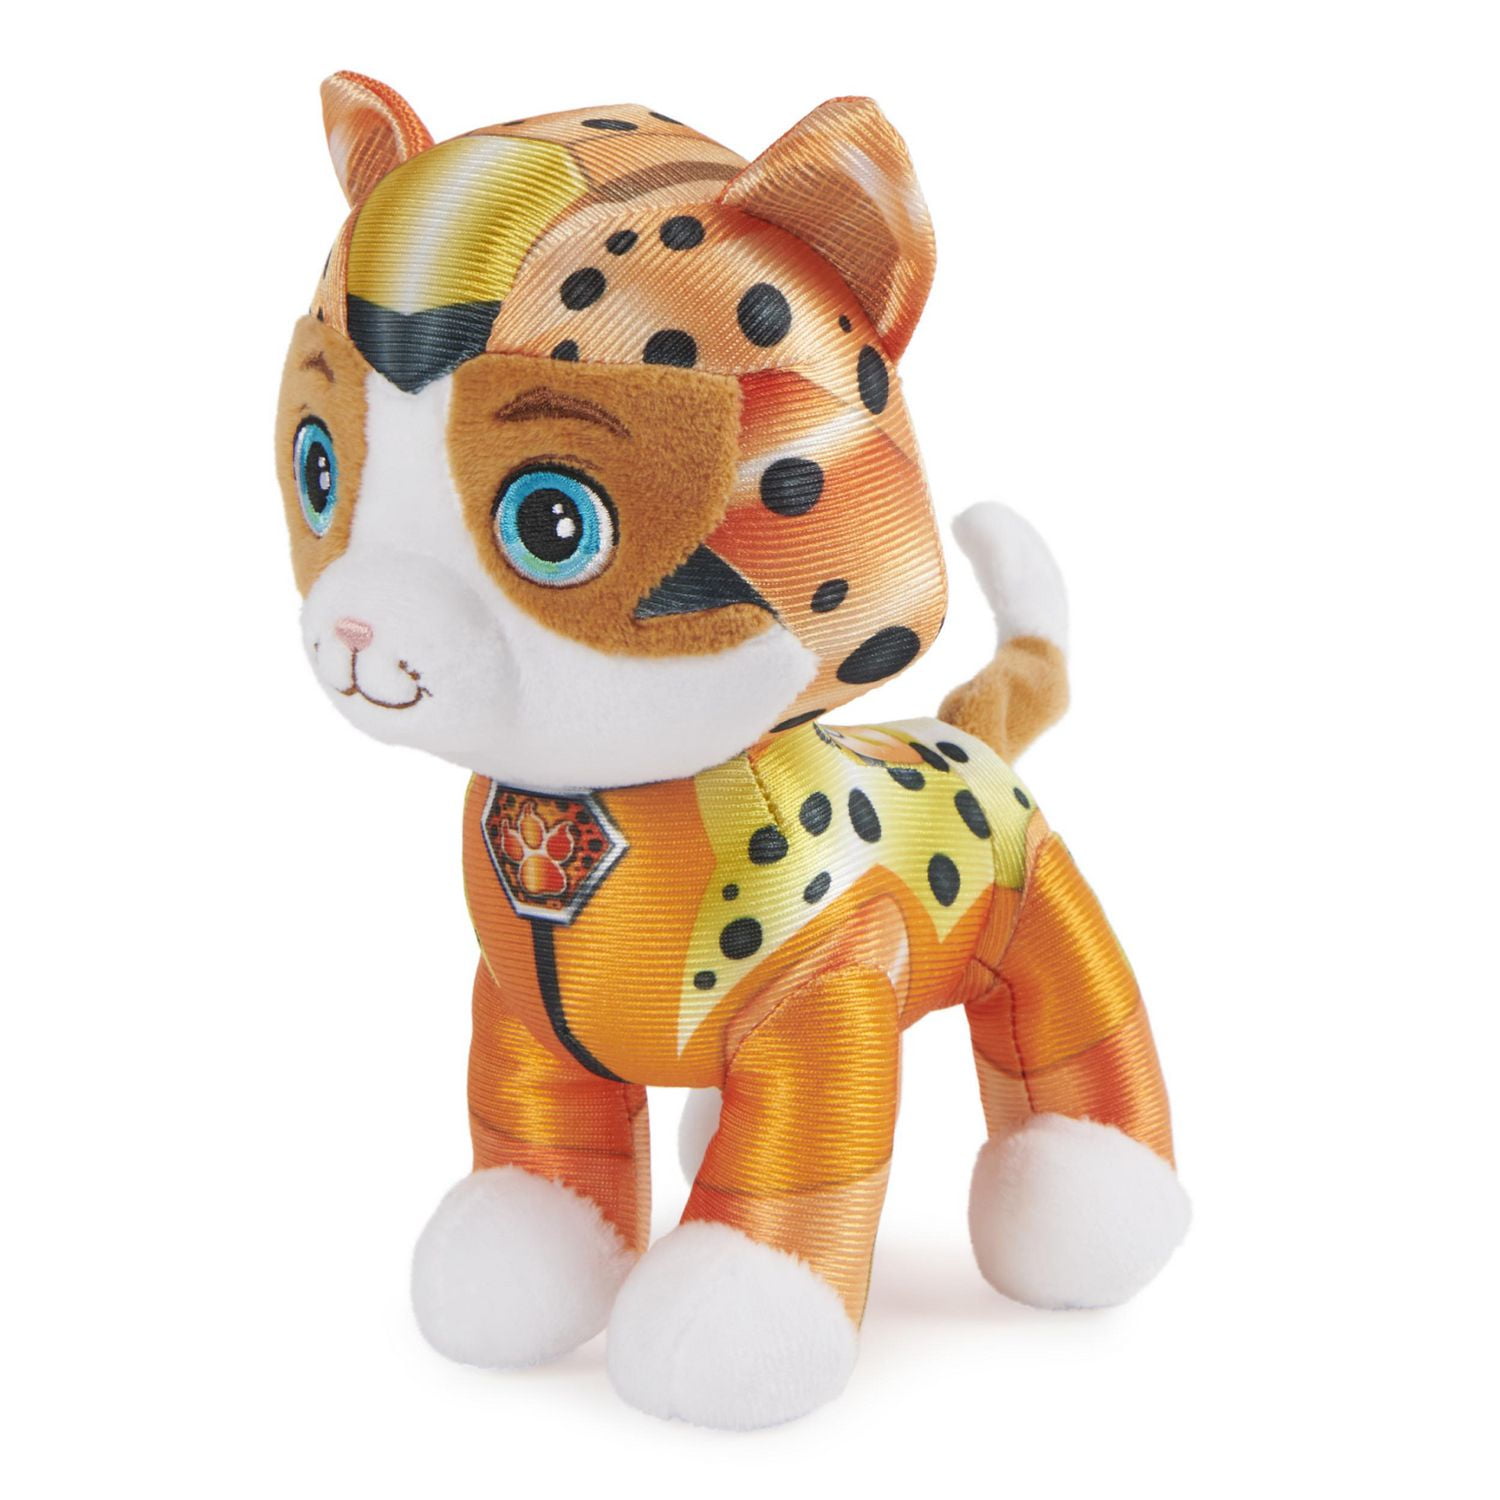 PAW Patrol, Cat Pack Wild Cat Stuffed Animal Plush Toy, 8-inch